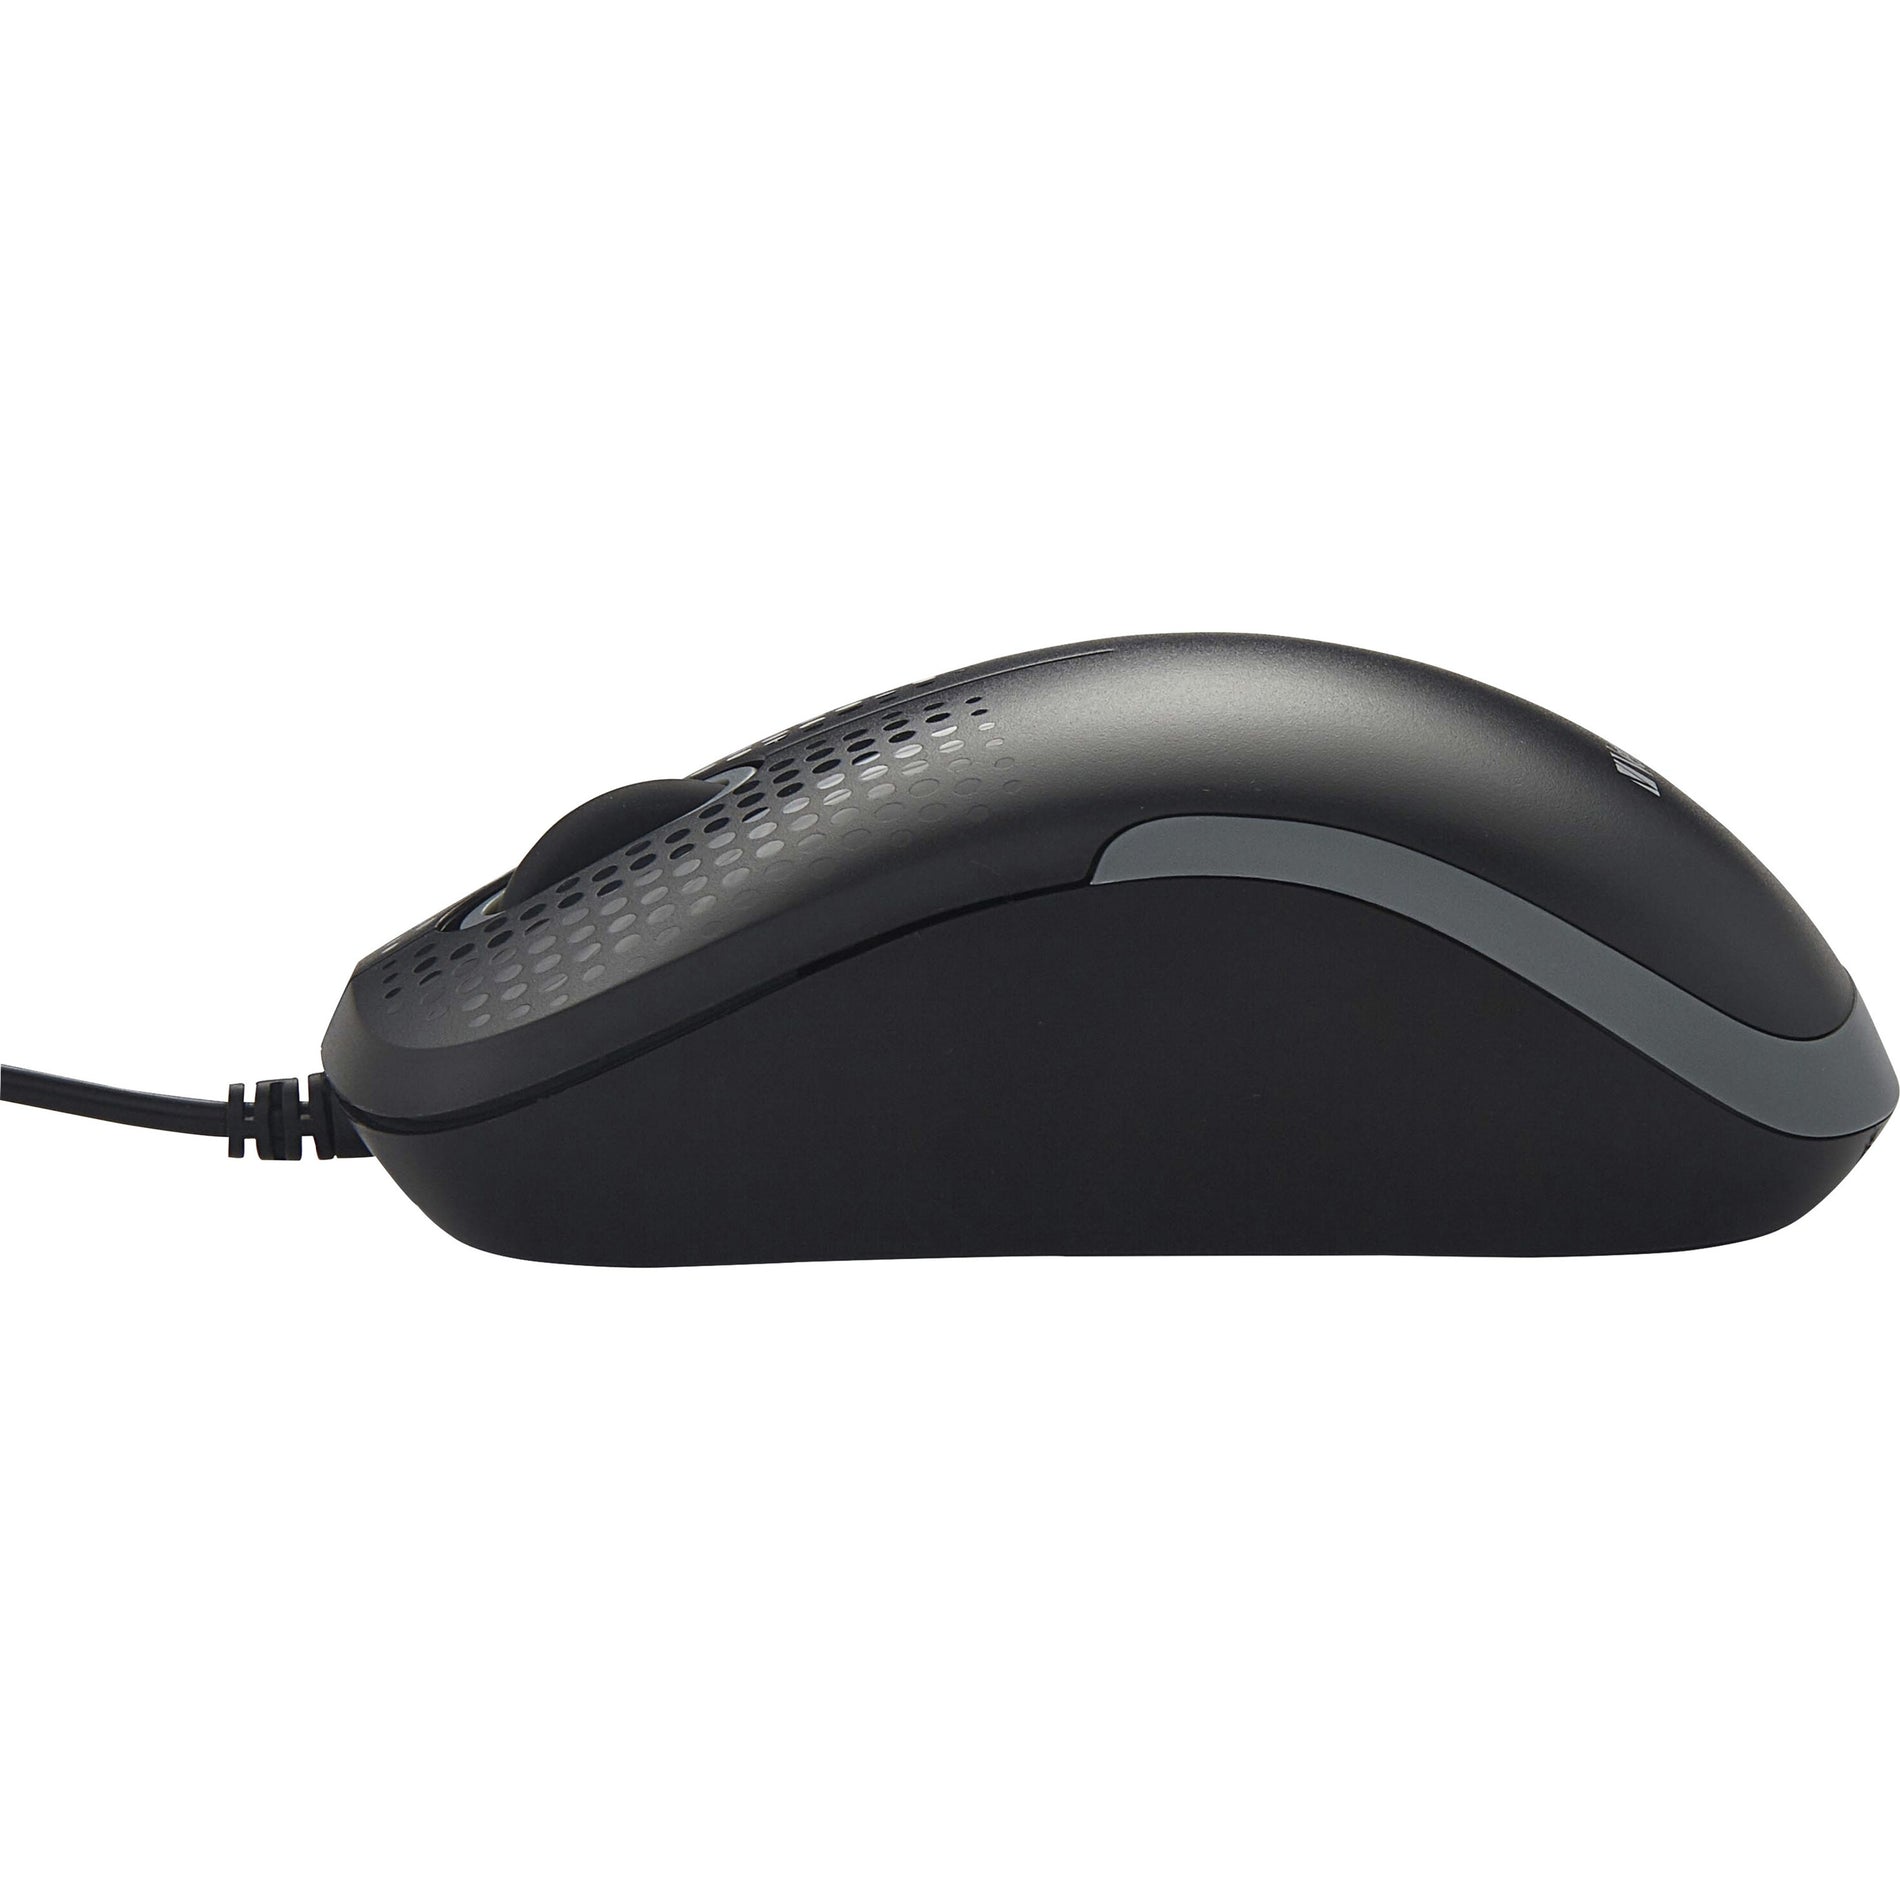 Verbatim 99790 Silent Corded Optical Mouse - Black, USB Type A, Scroll Wheel